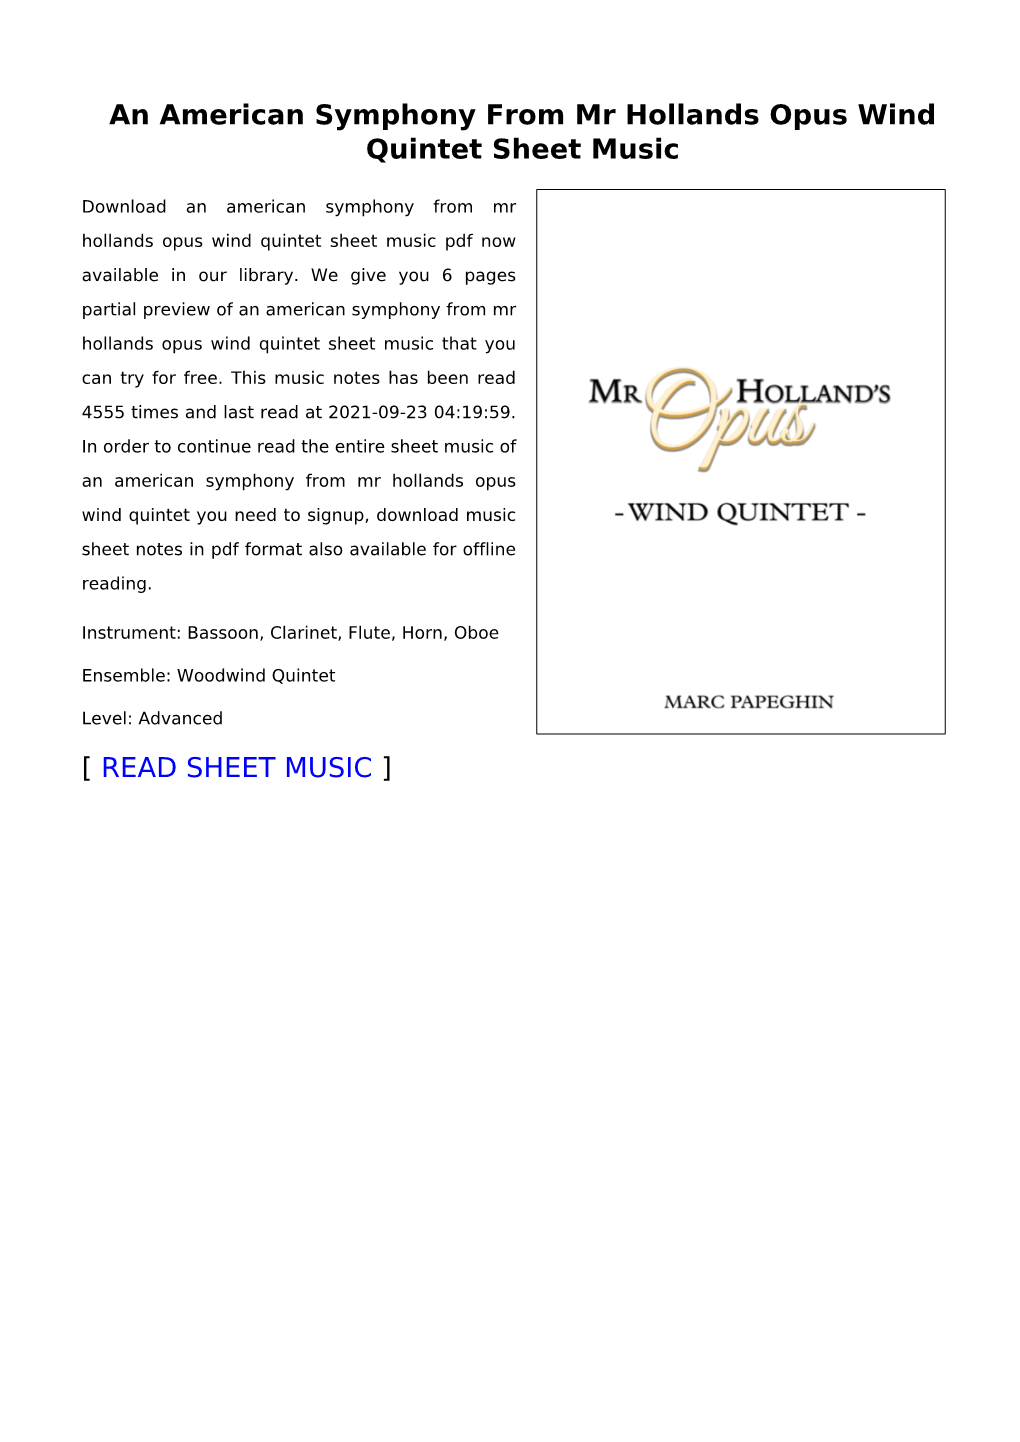 An American Symphony from Mr Hollands Opus Wind Quintet Sheet Music